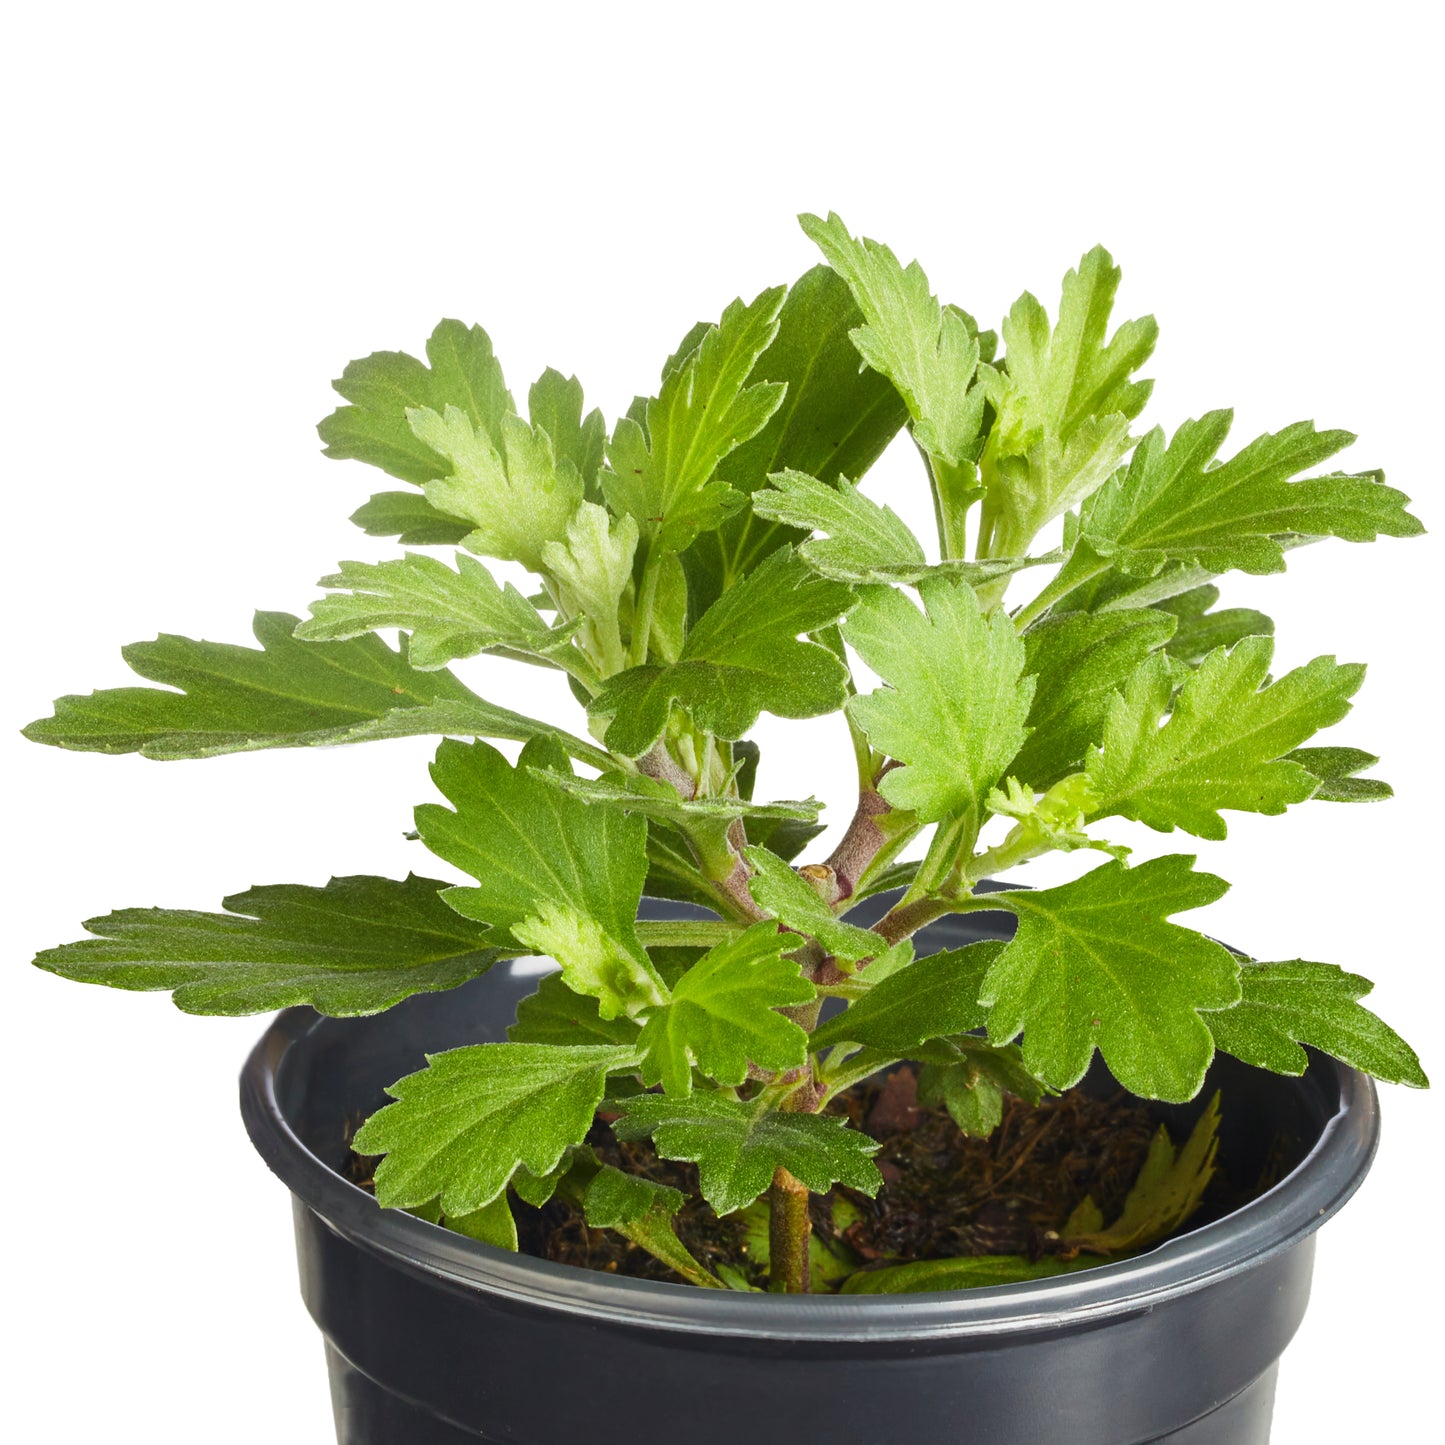 Mums Regal Cheryl Plantlings Plus Live Baby Plants 4in. Pot, 2-Pack